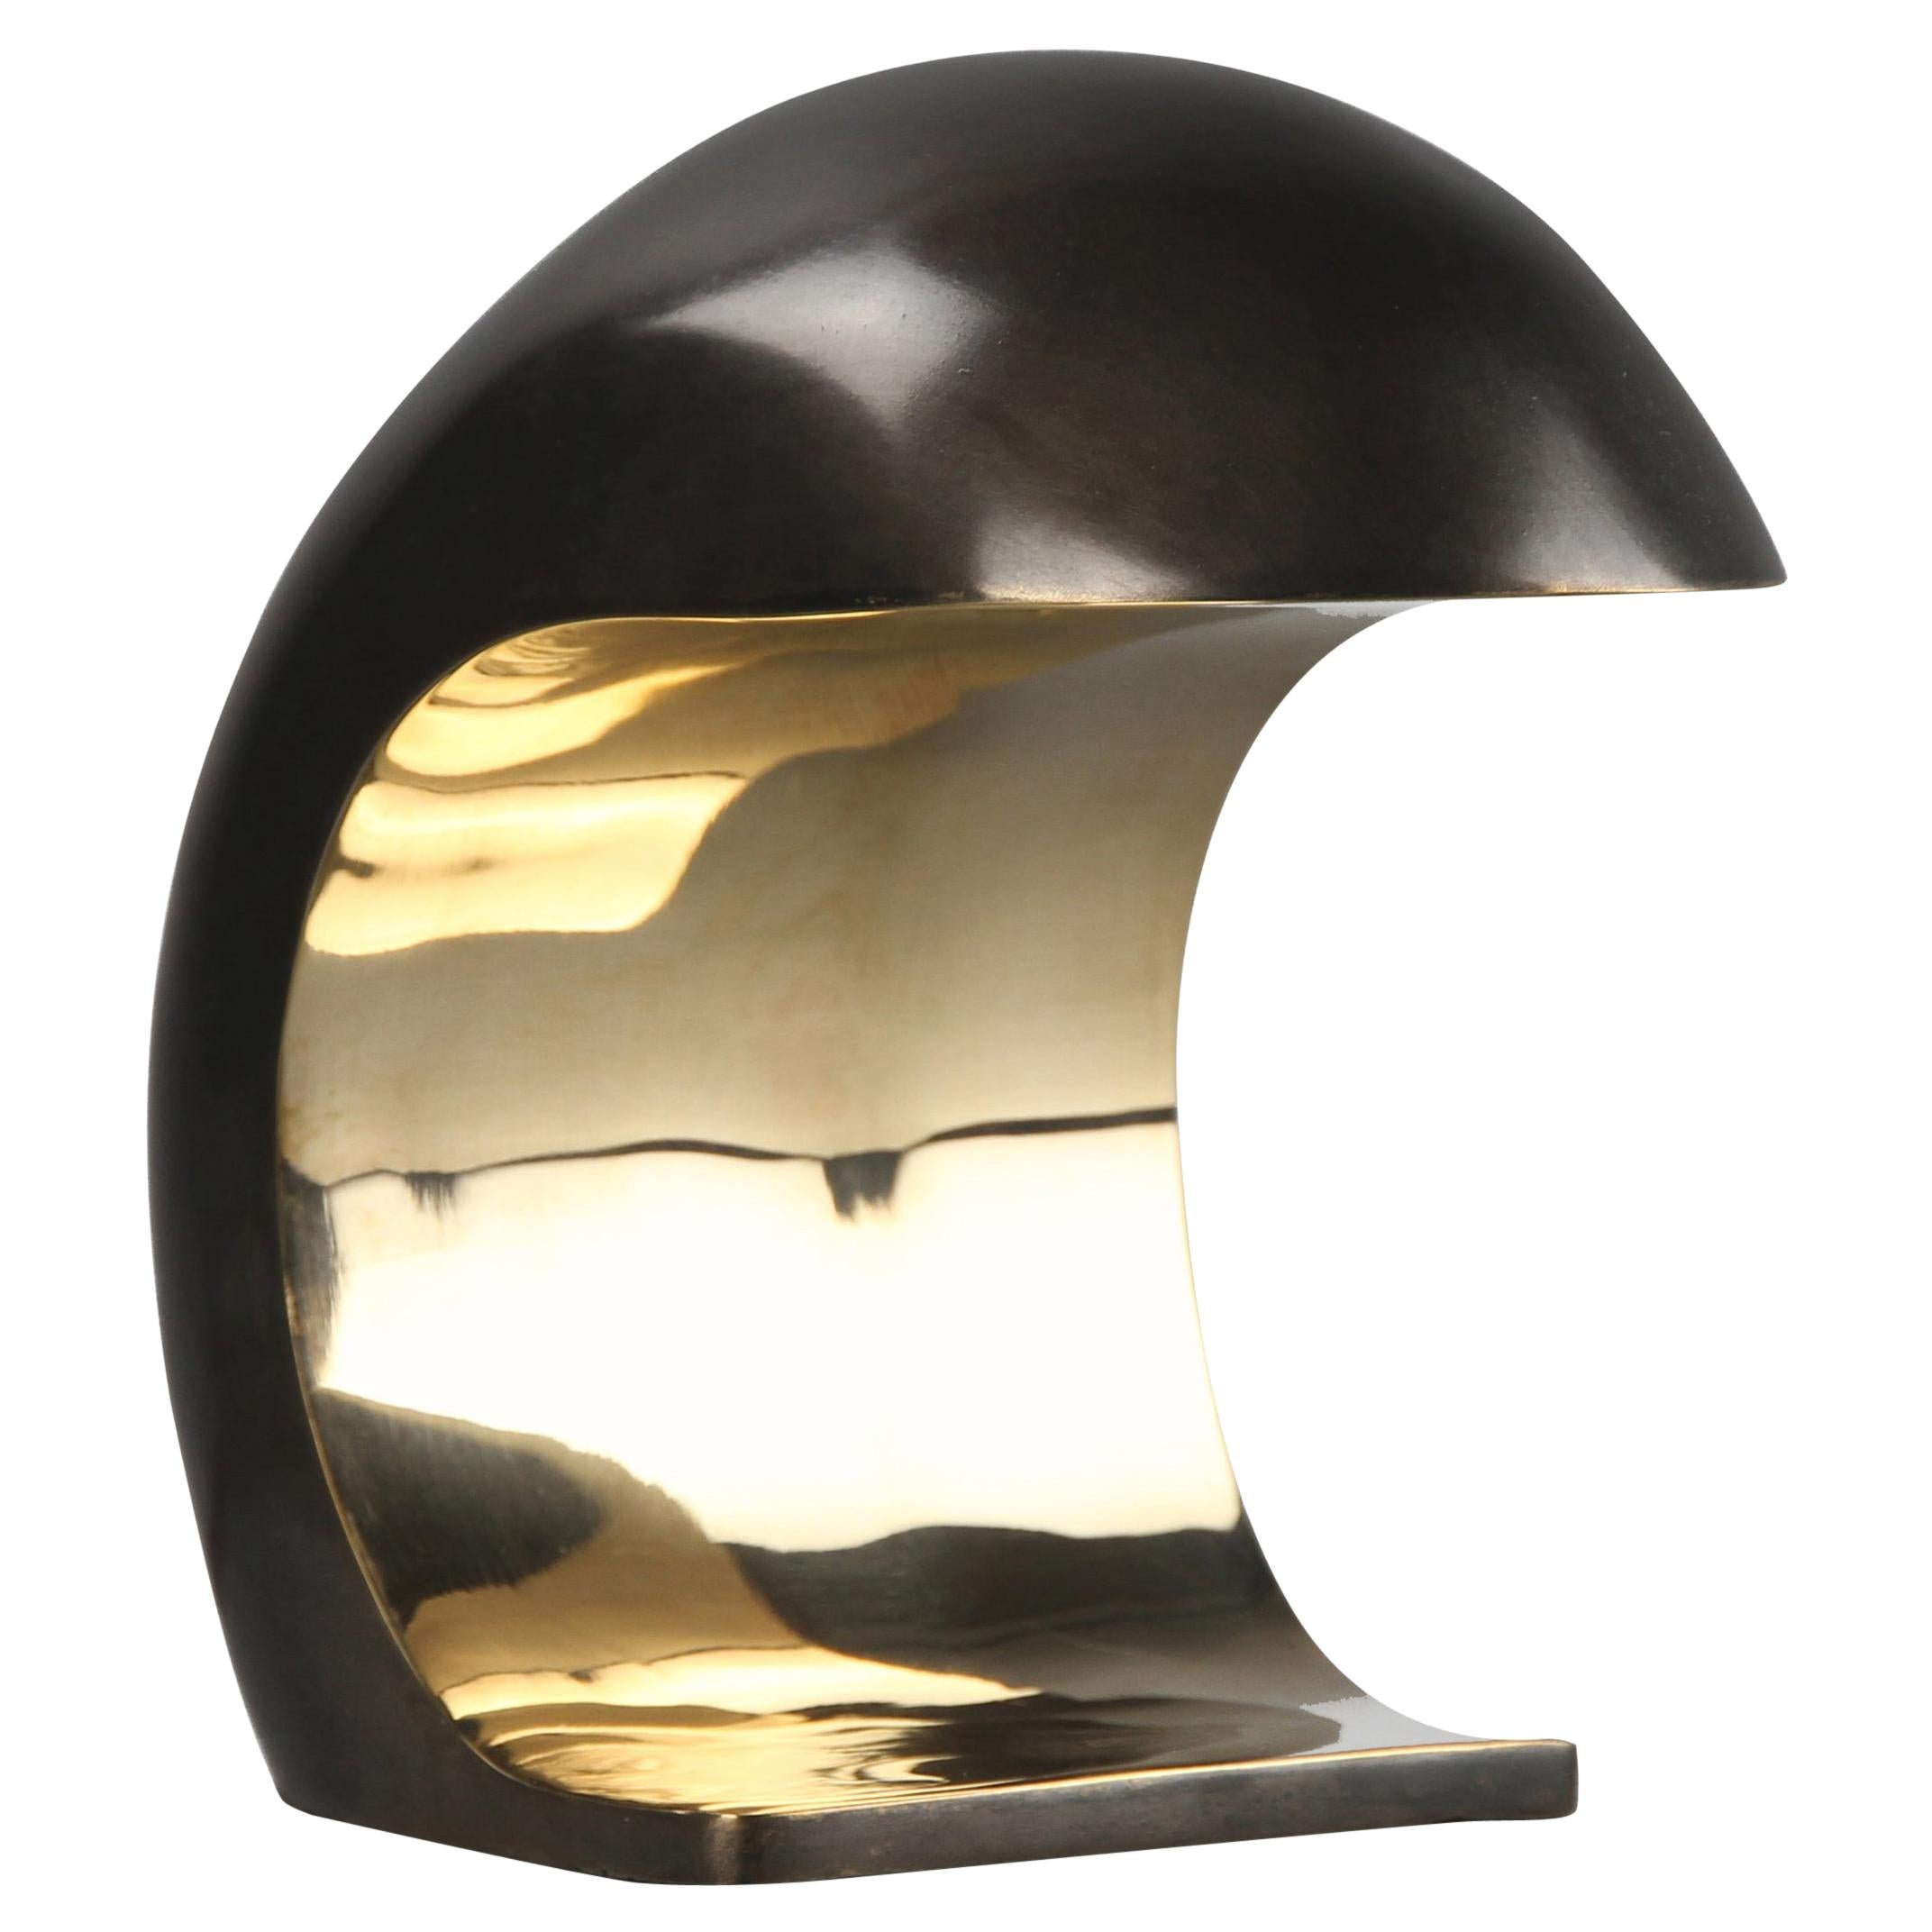 Nautilus Desk Lamp in Bronze, 2020, Signed, by Christopher Kreiling Studio